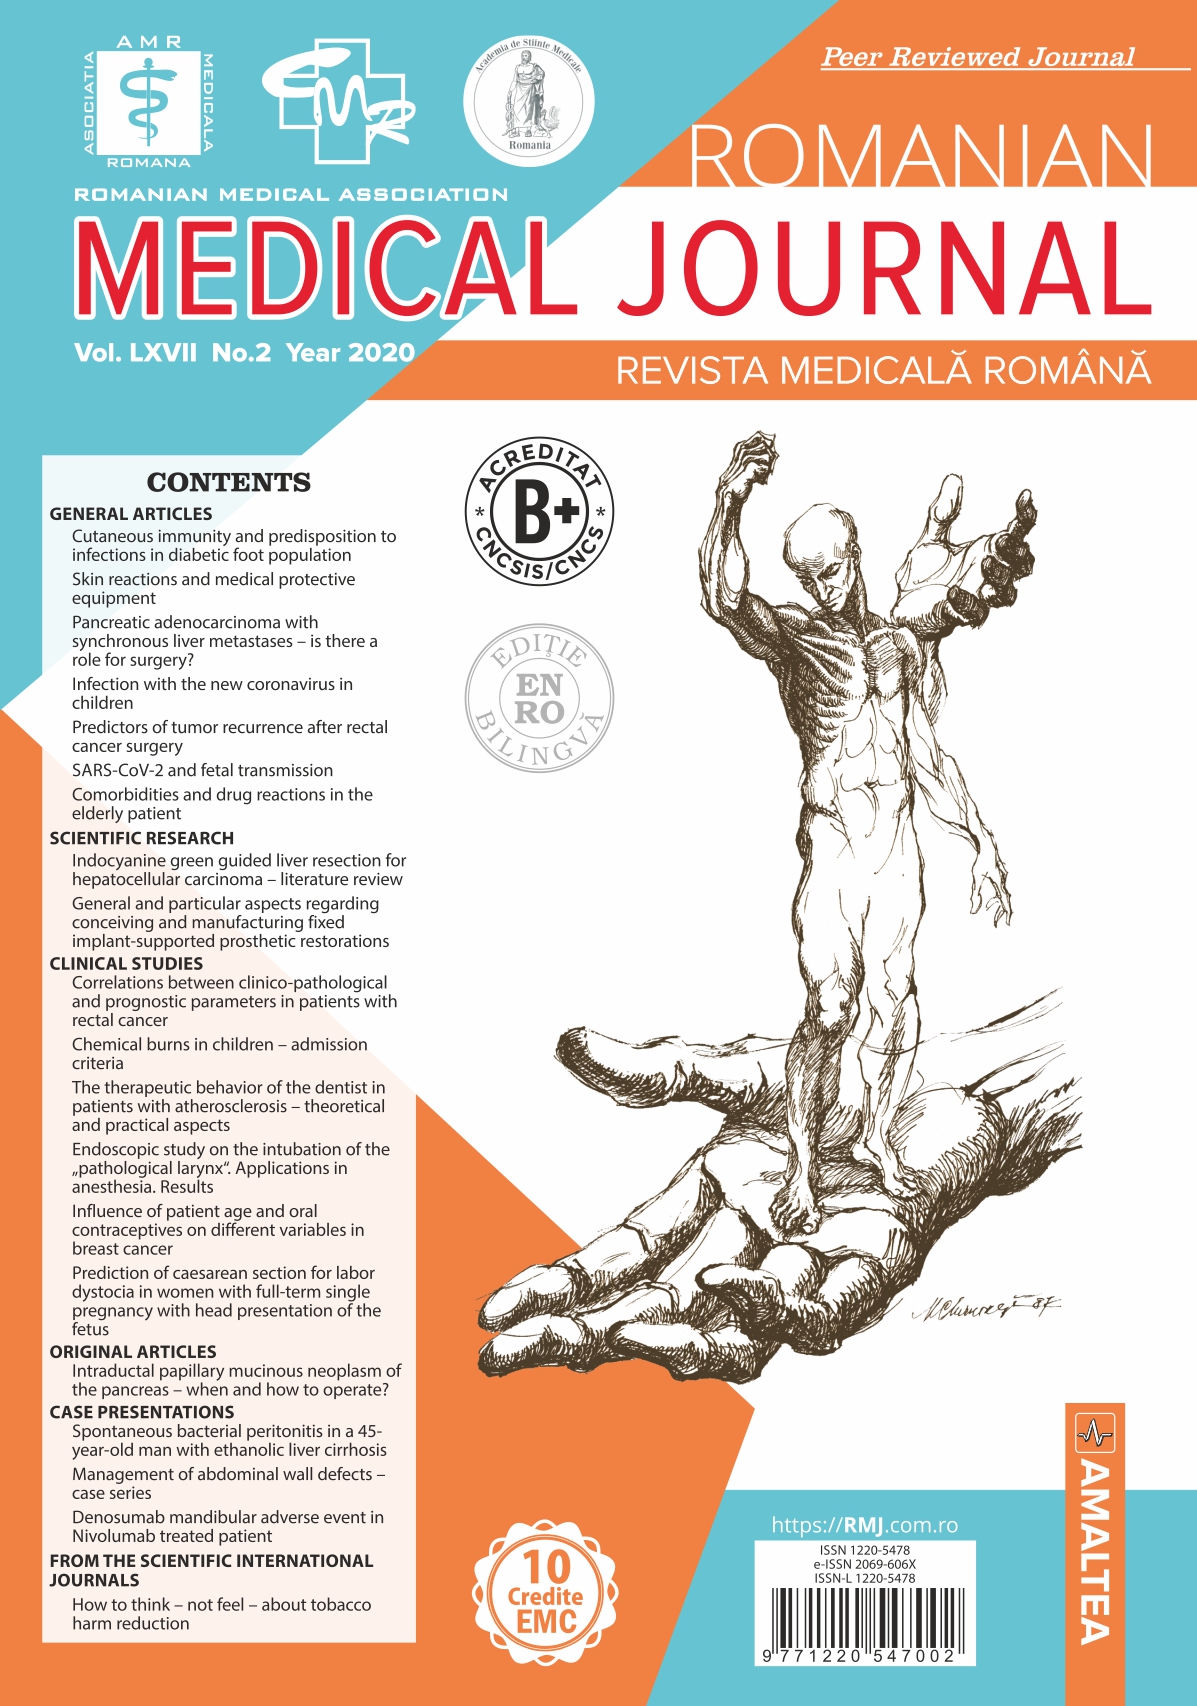 Romanian Medical Journal - REVISTA MEDICALA ROMANA, Vol. LXVII, No. 2, Year 2020